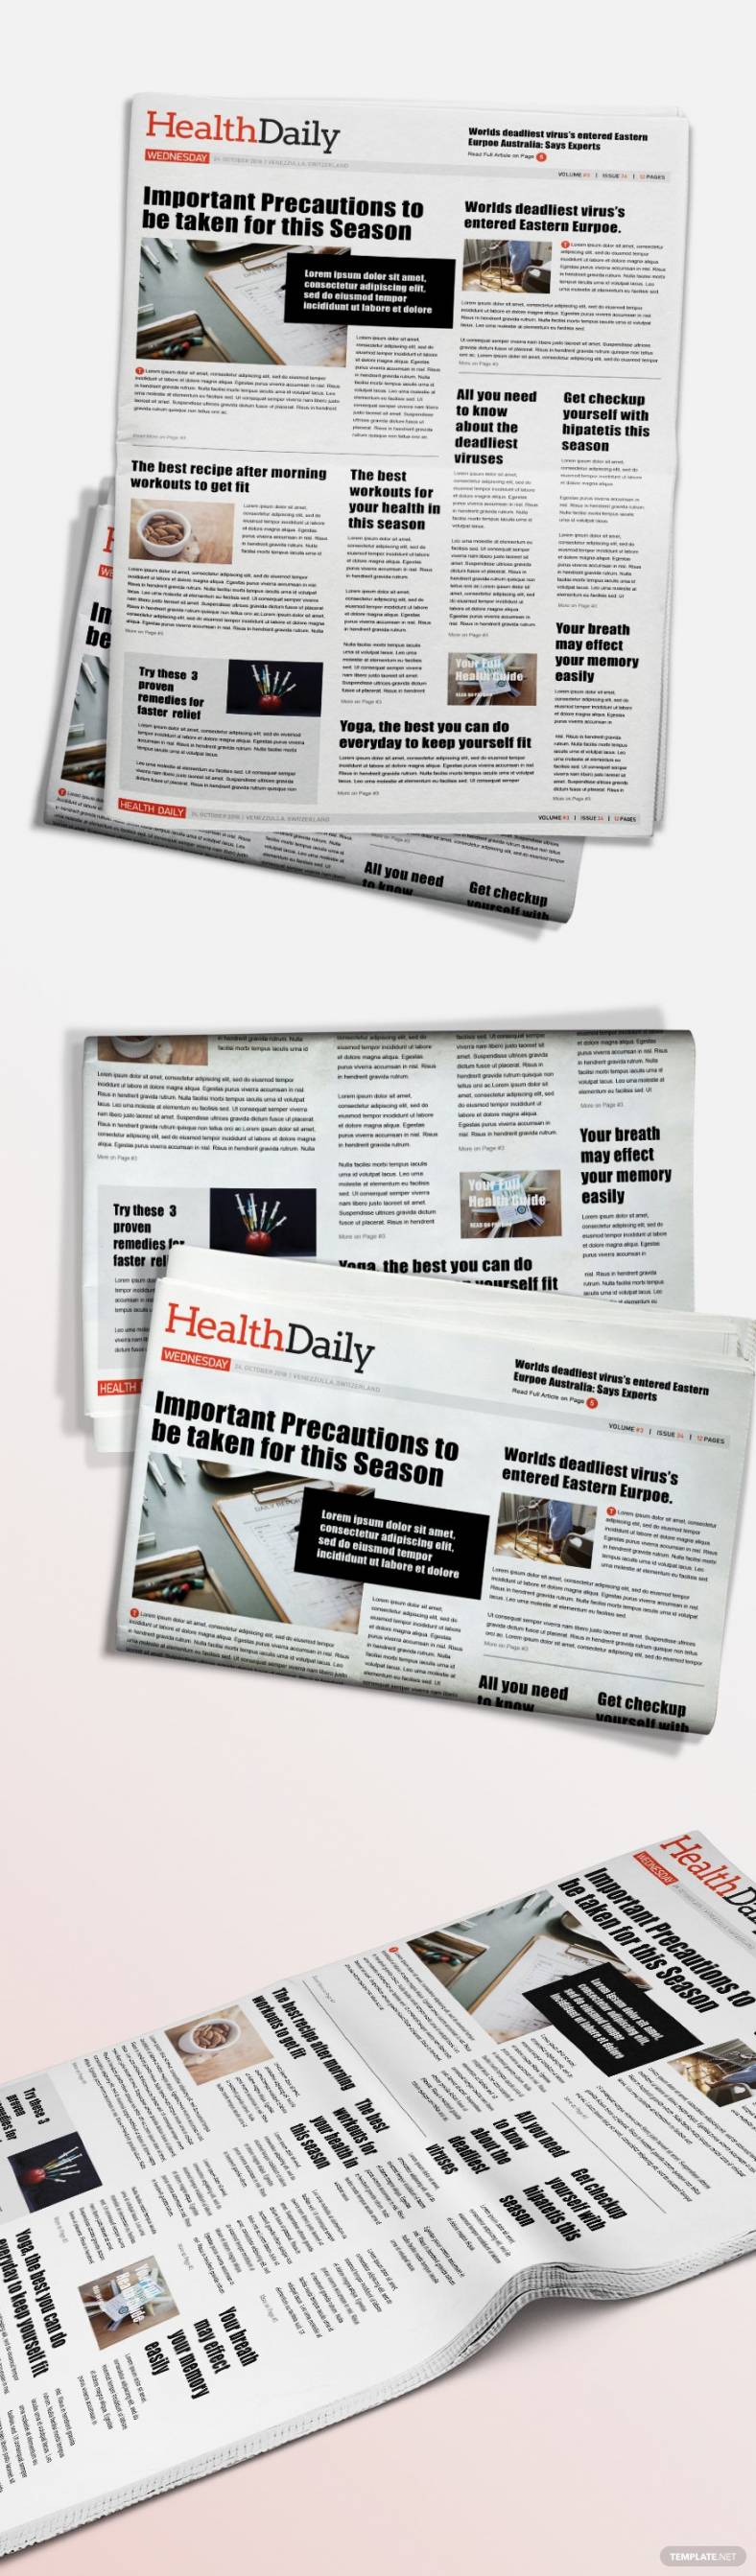 health newspaper 788x